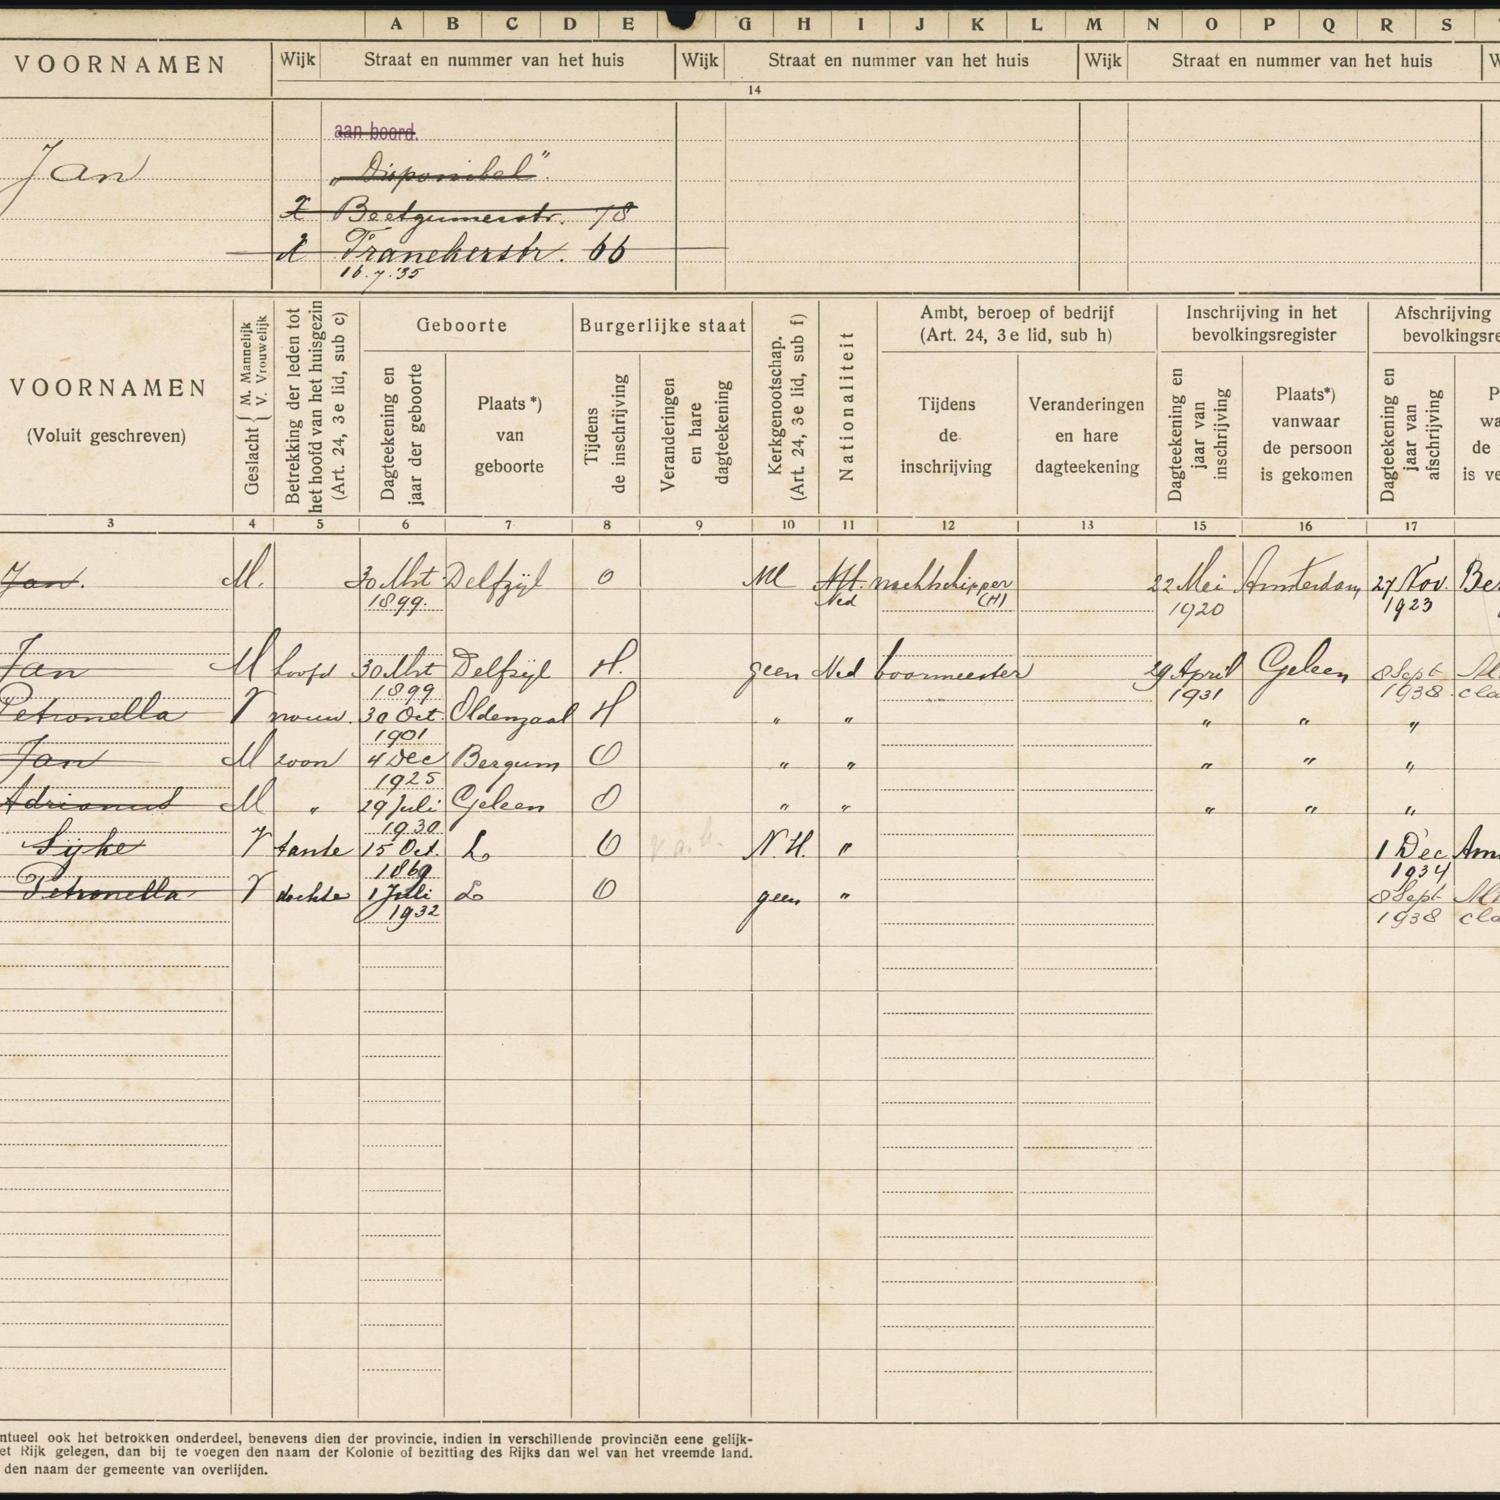 Population registry, Leeuwarden, archive 1002, inventory 4973, Feenstra, Jan